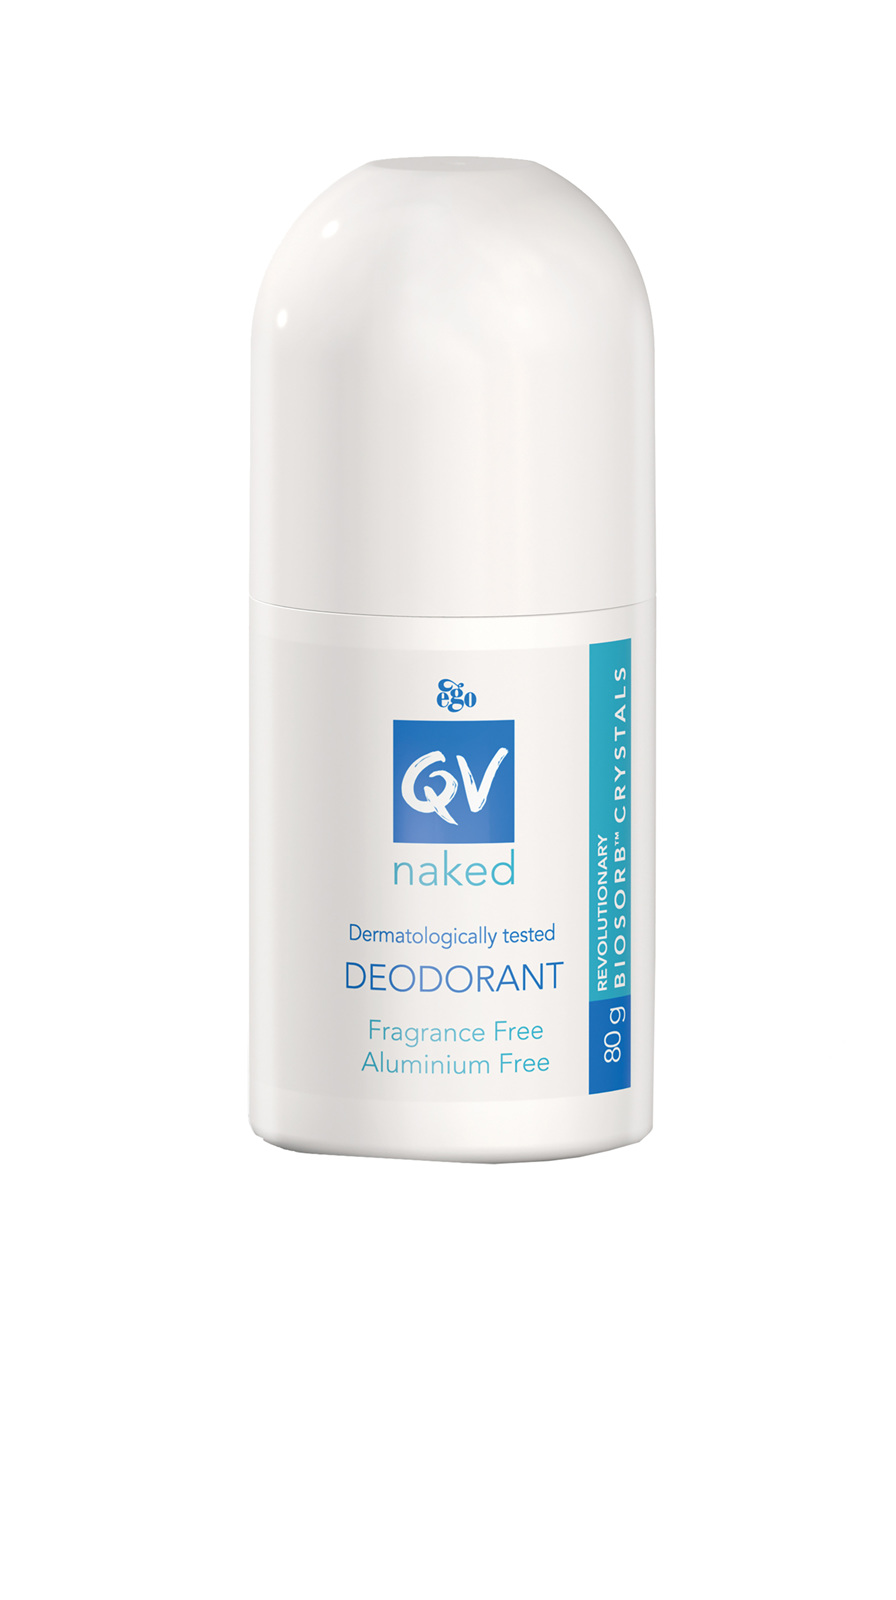 Ego Qv Naked Anti-Perspirant Deodorant Fragrance Free 100g 